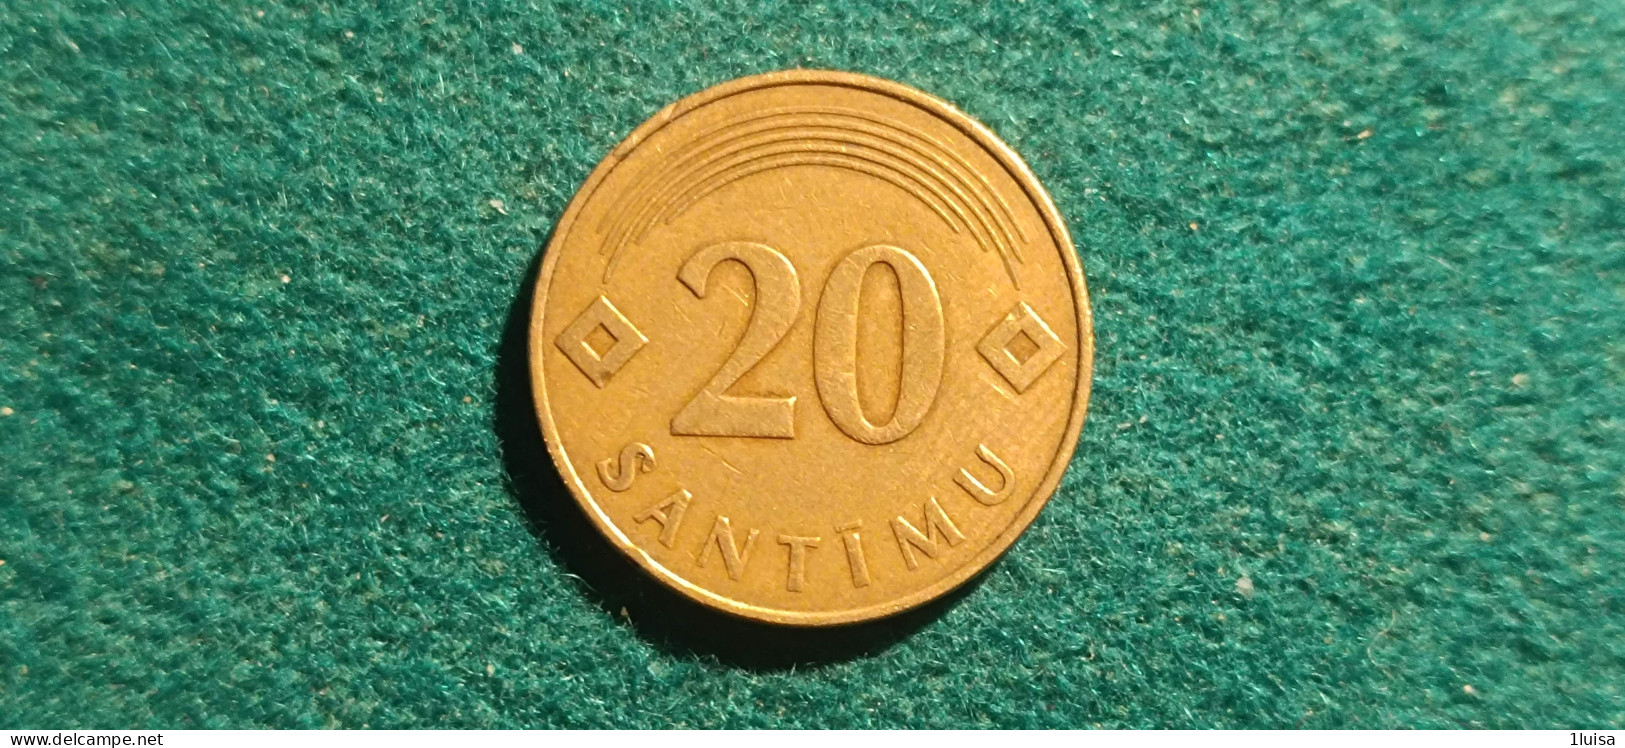 LITUANIA 20 SANTIMU 1992 - Lithuania